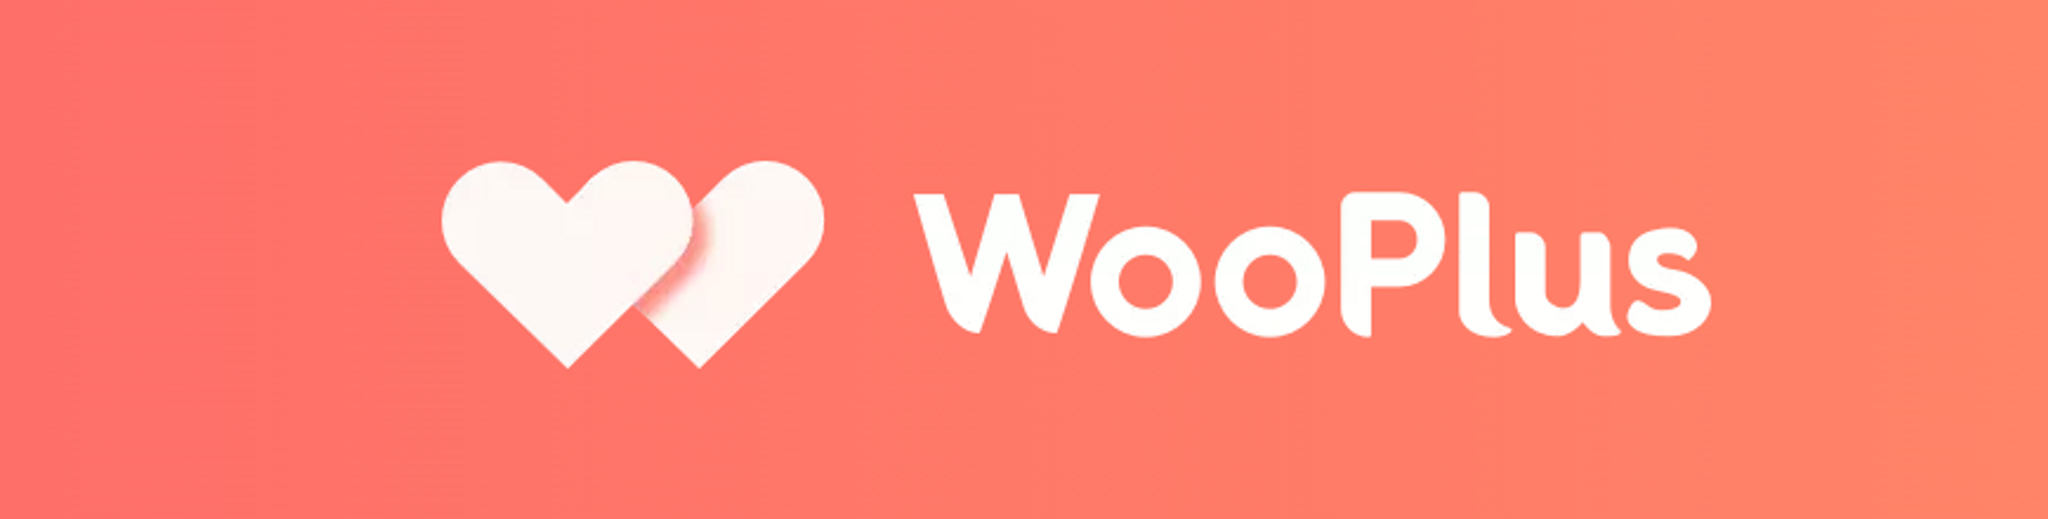 wooplus logo